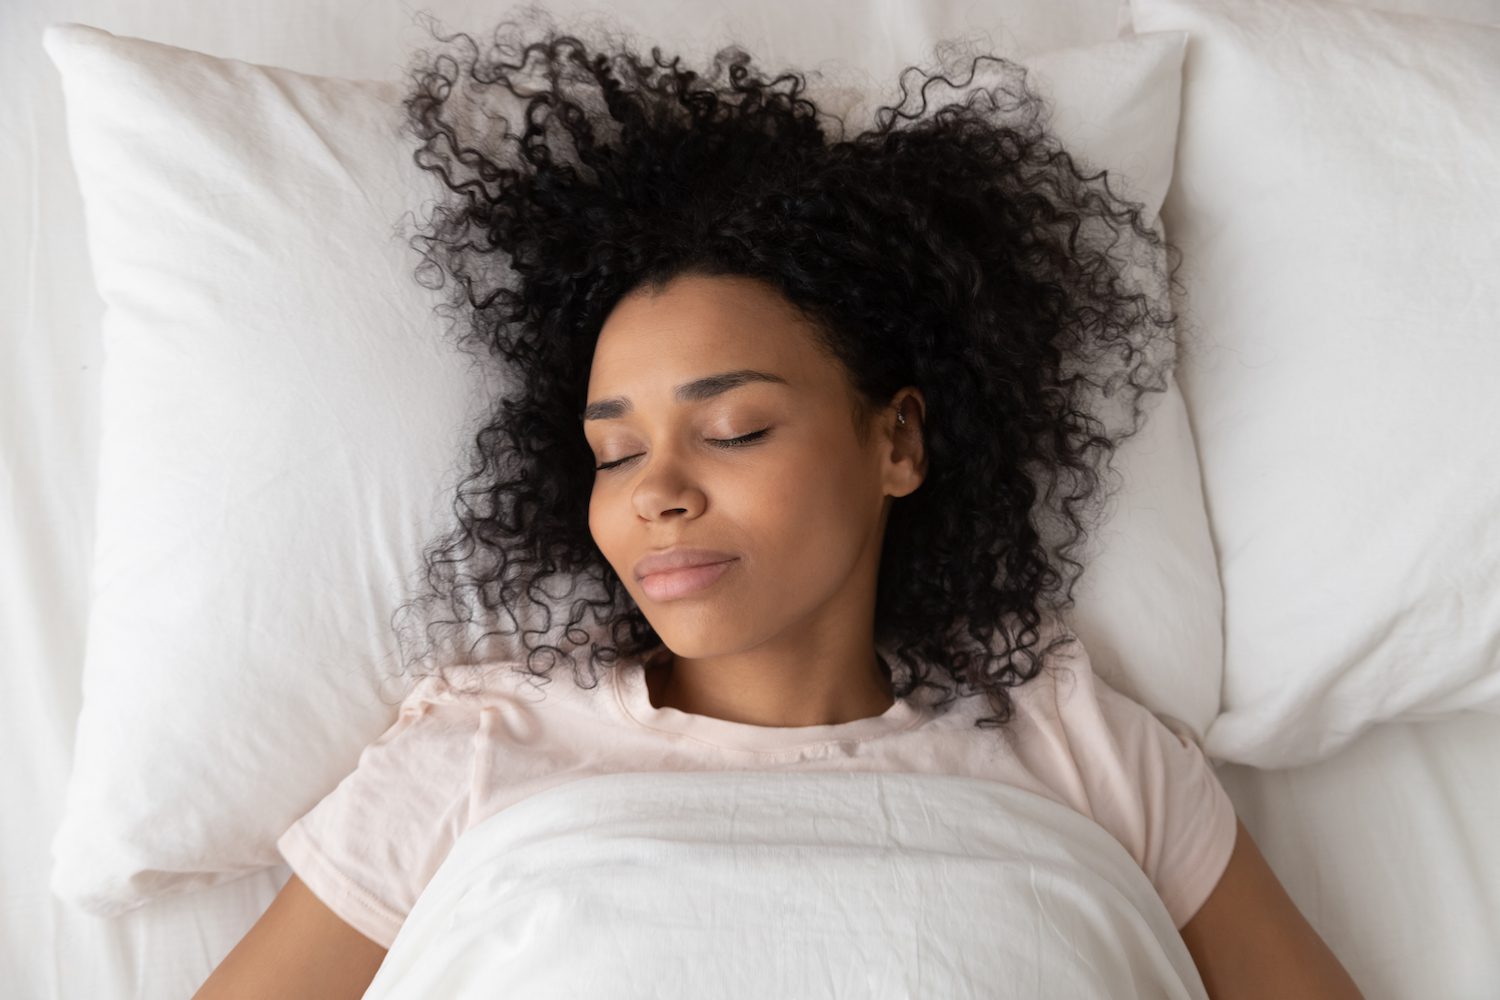 Polyphasic Sleep: Benefits and Risks